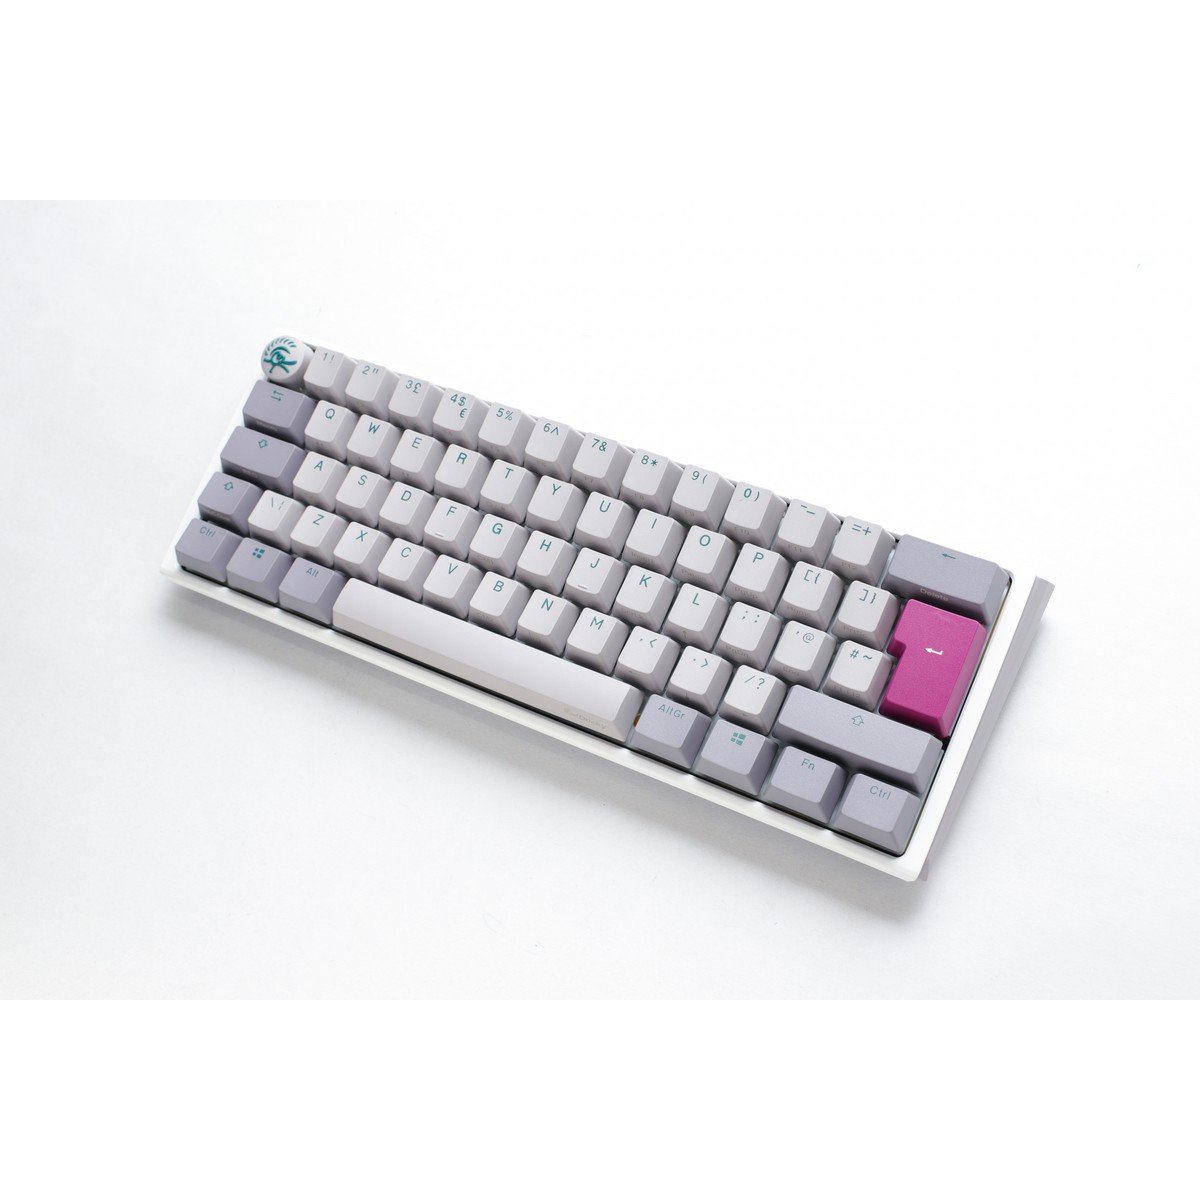 Ducky - Ducky One 3 Mist Mini 60% USB RGB Mechanical Gaming Keyboard Cherry MX Blue Switch - UK Layout